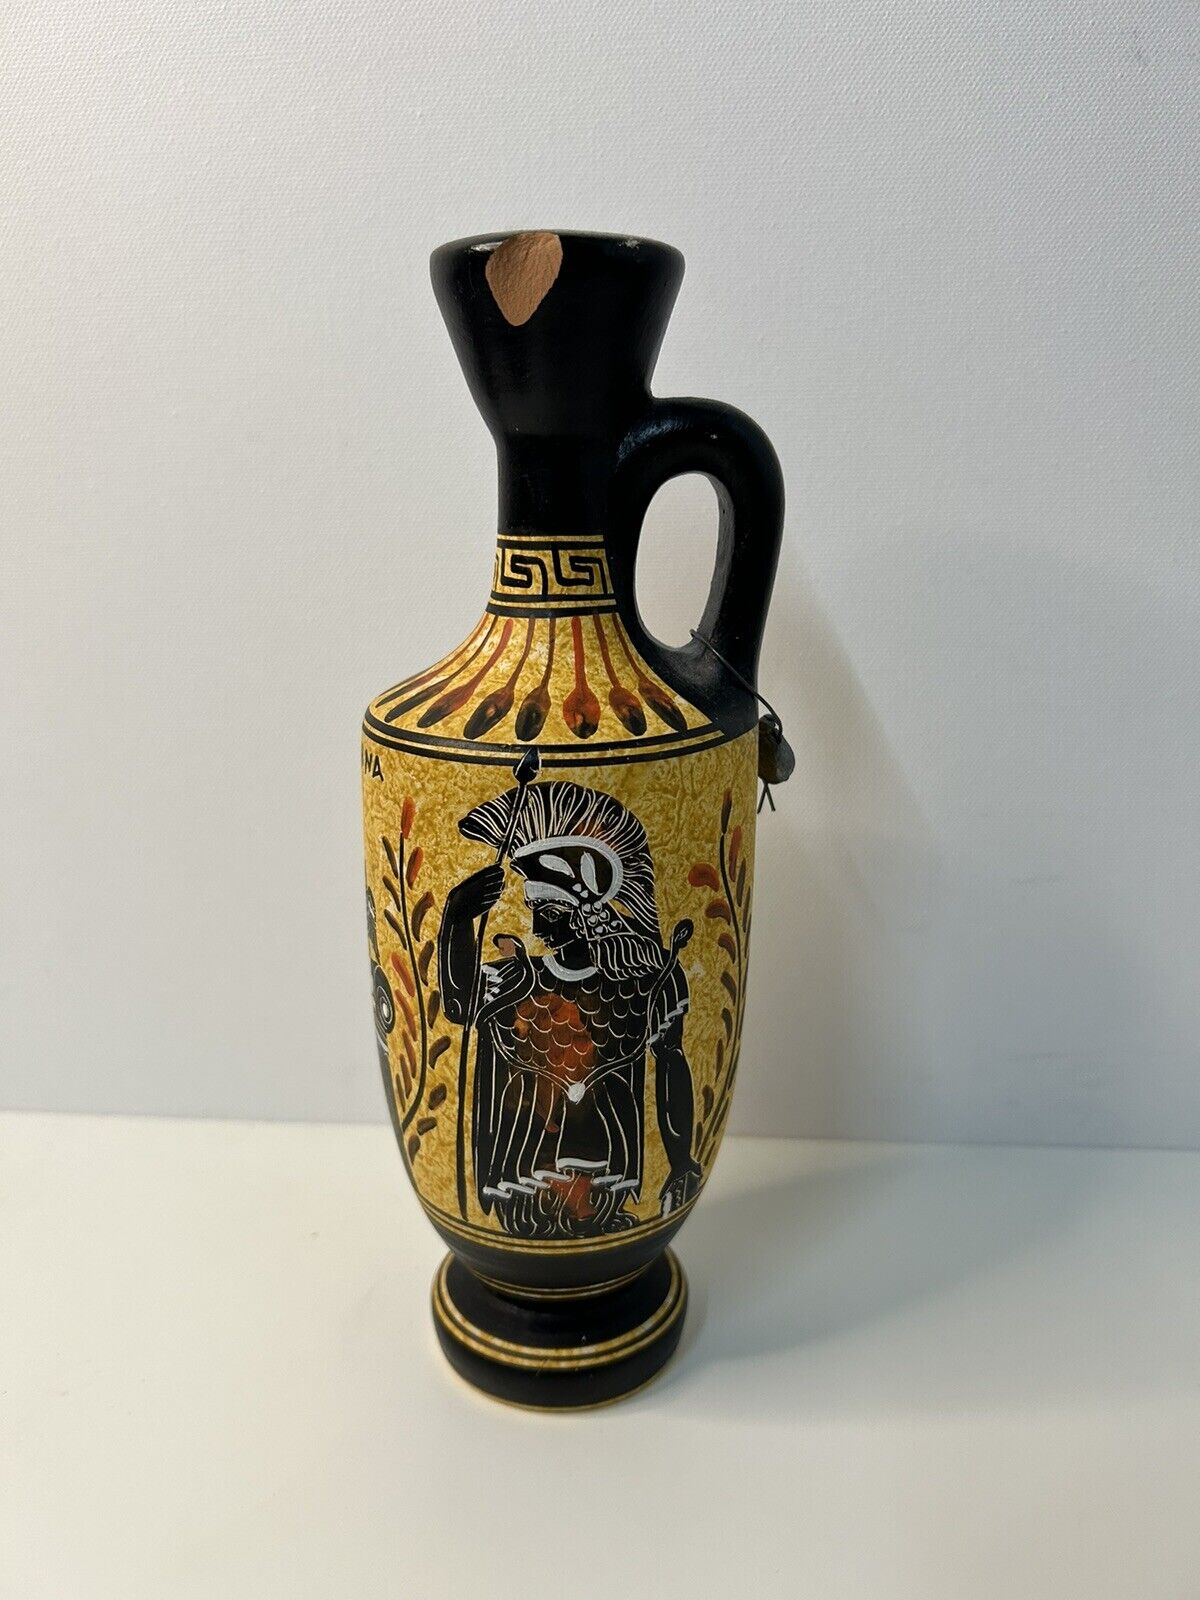 Museum Copy Attic Art Greece 5th CB Vase Rare VTG Century Handmade Replica Decor